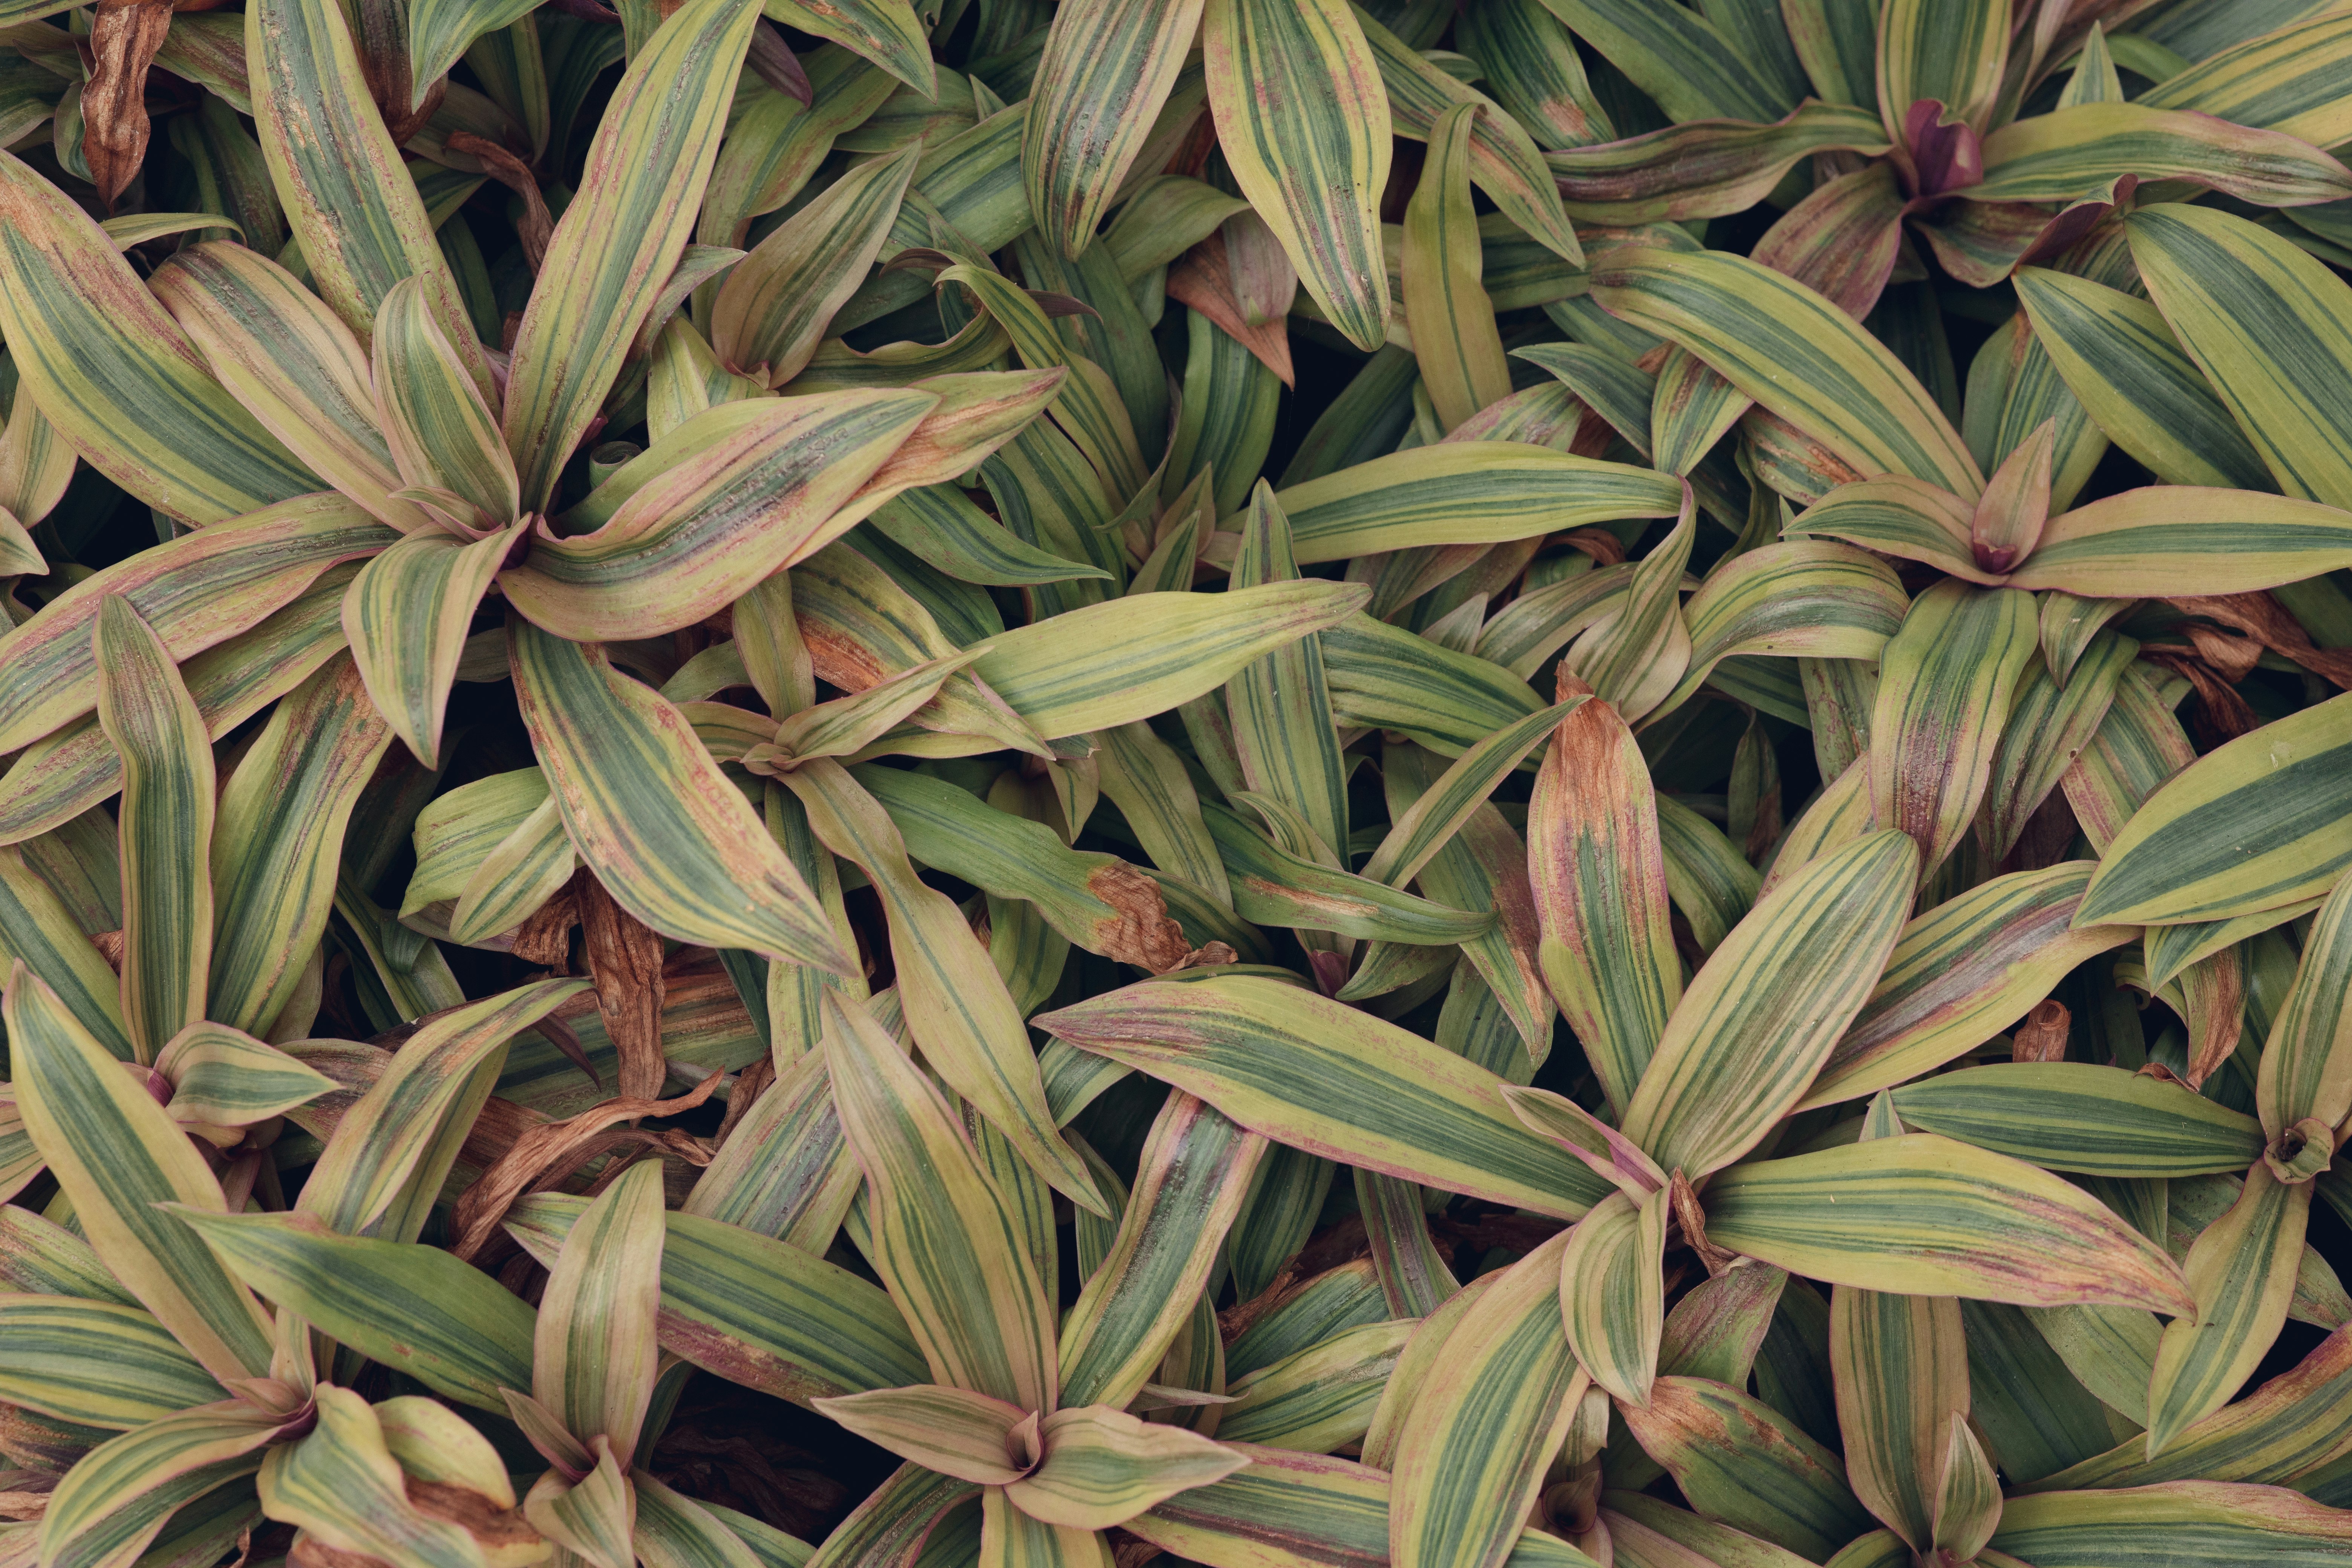 green leaves on brown soil